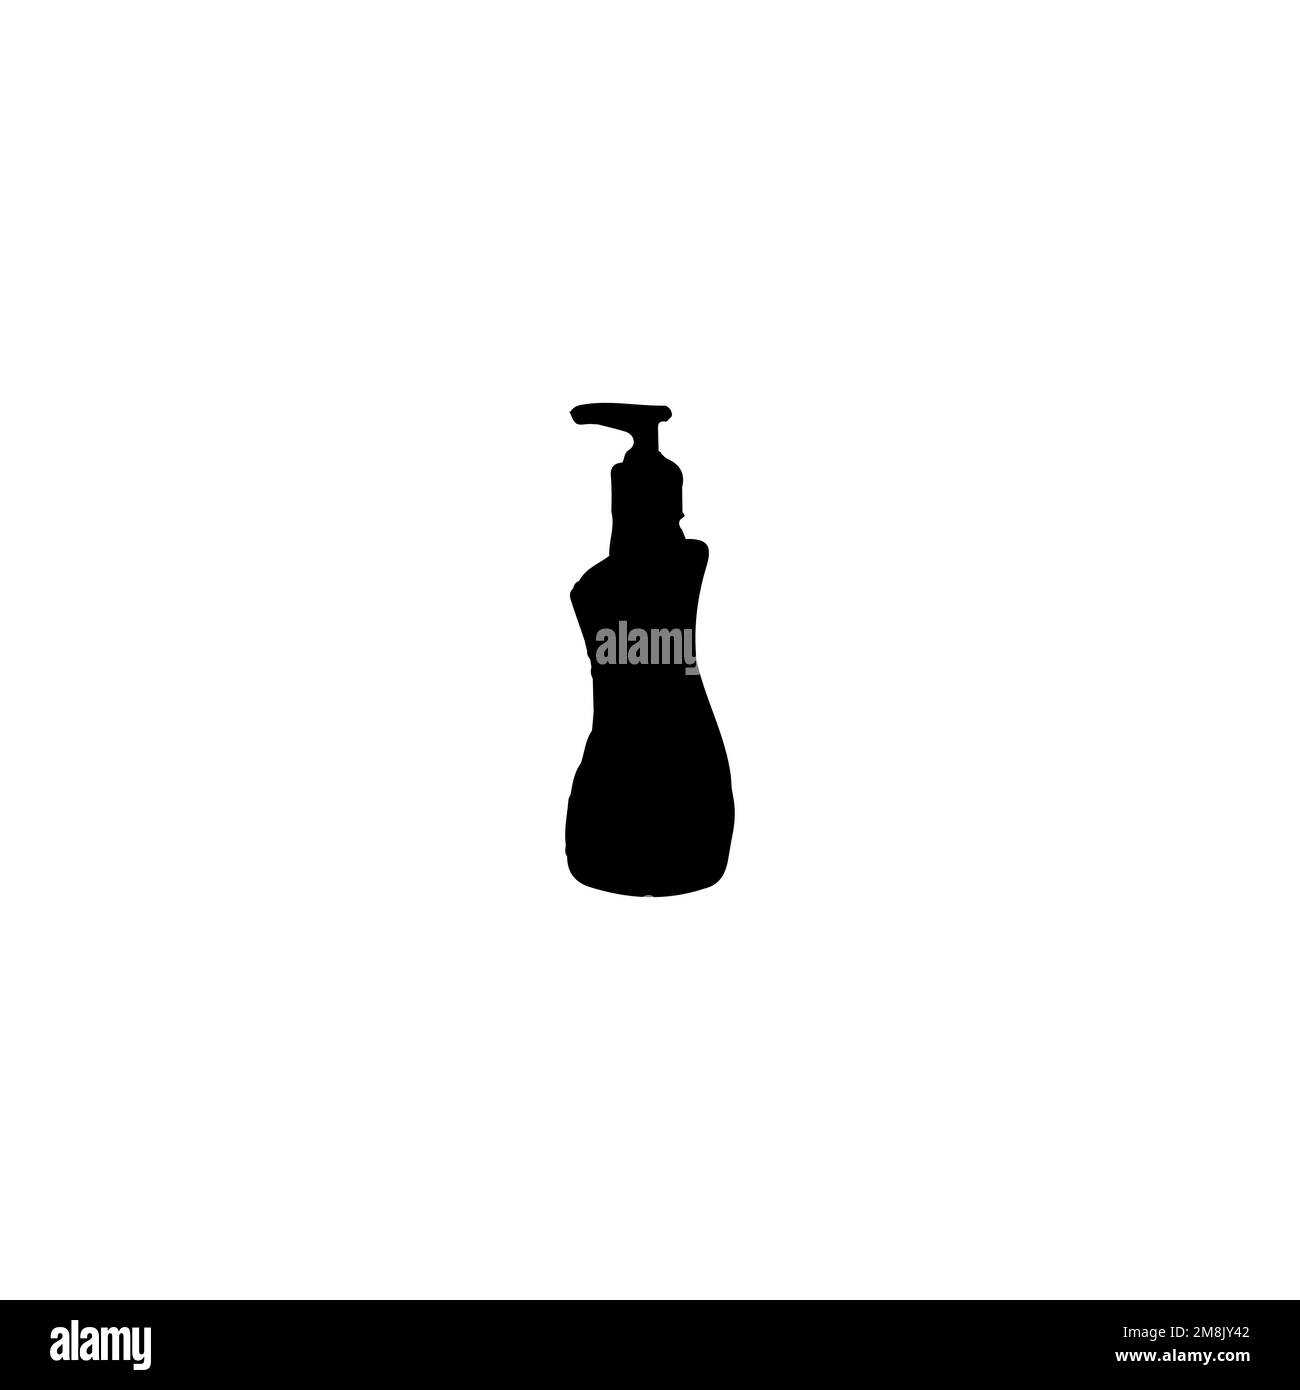 Hand antiseptic icon. Simple style corona virus hygienic cleaning poster background symbol. Hand antiseptic brand logo design element. Stock Vector